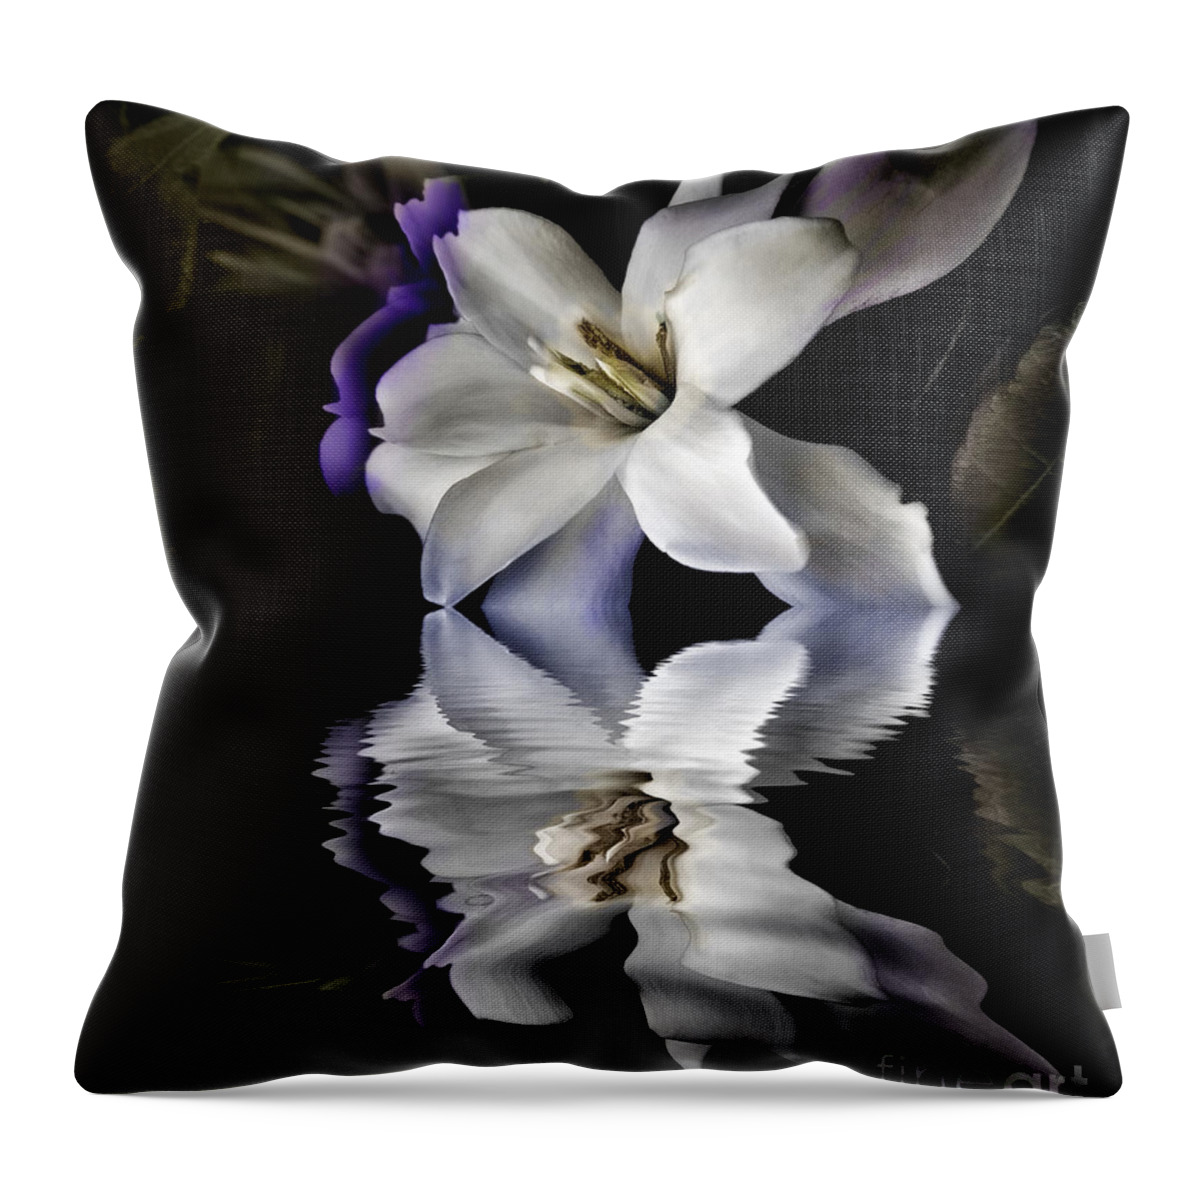 Flower Throw Pillow featuring the photograph Gardenia by Patti Schulze